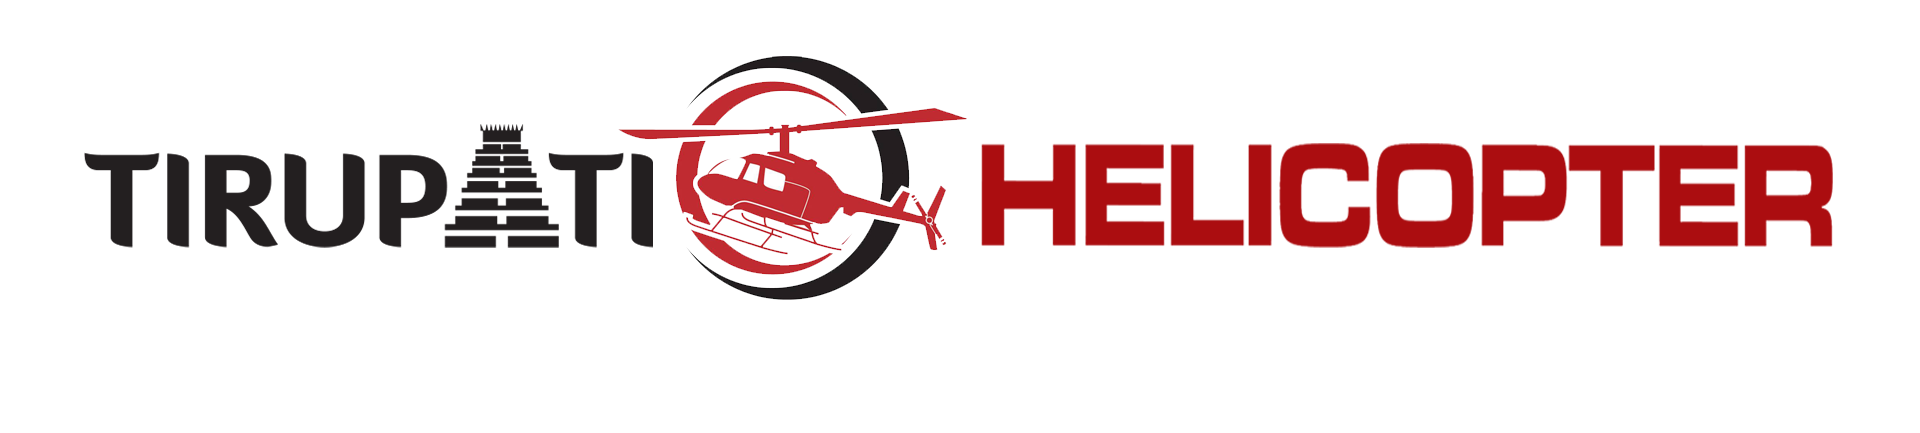 tirupati helicopter service logo